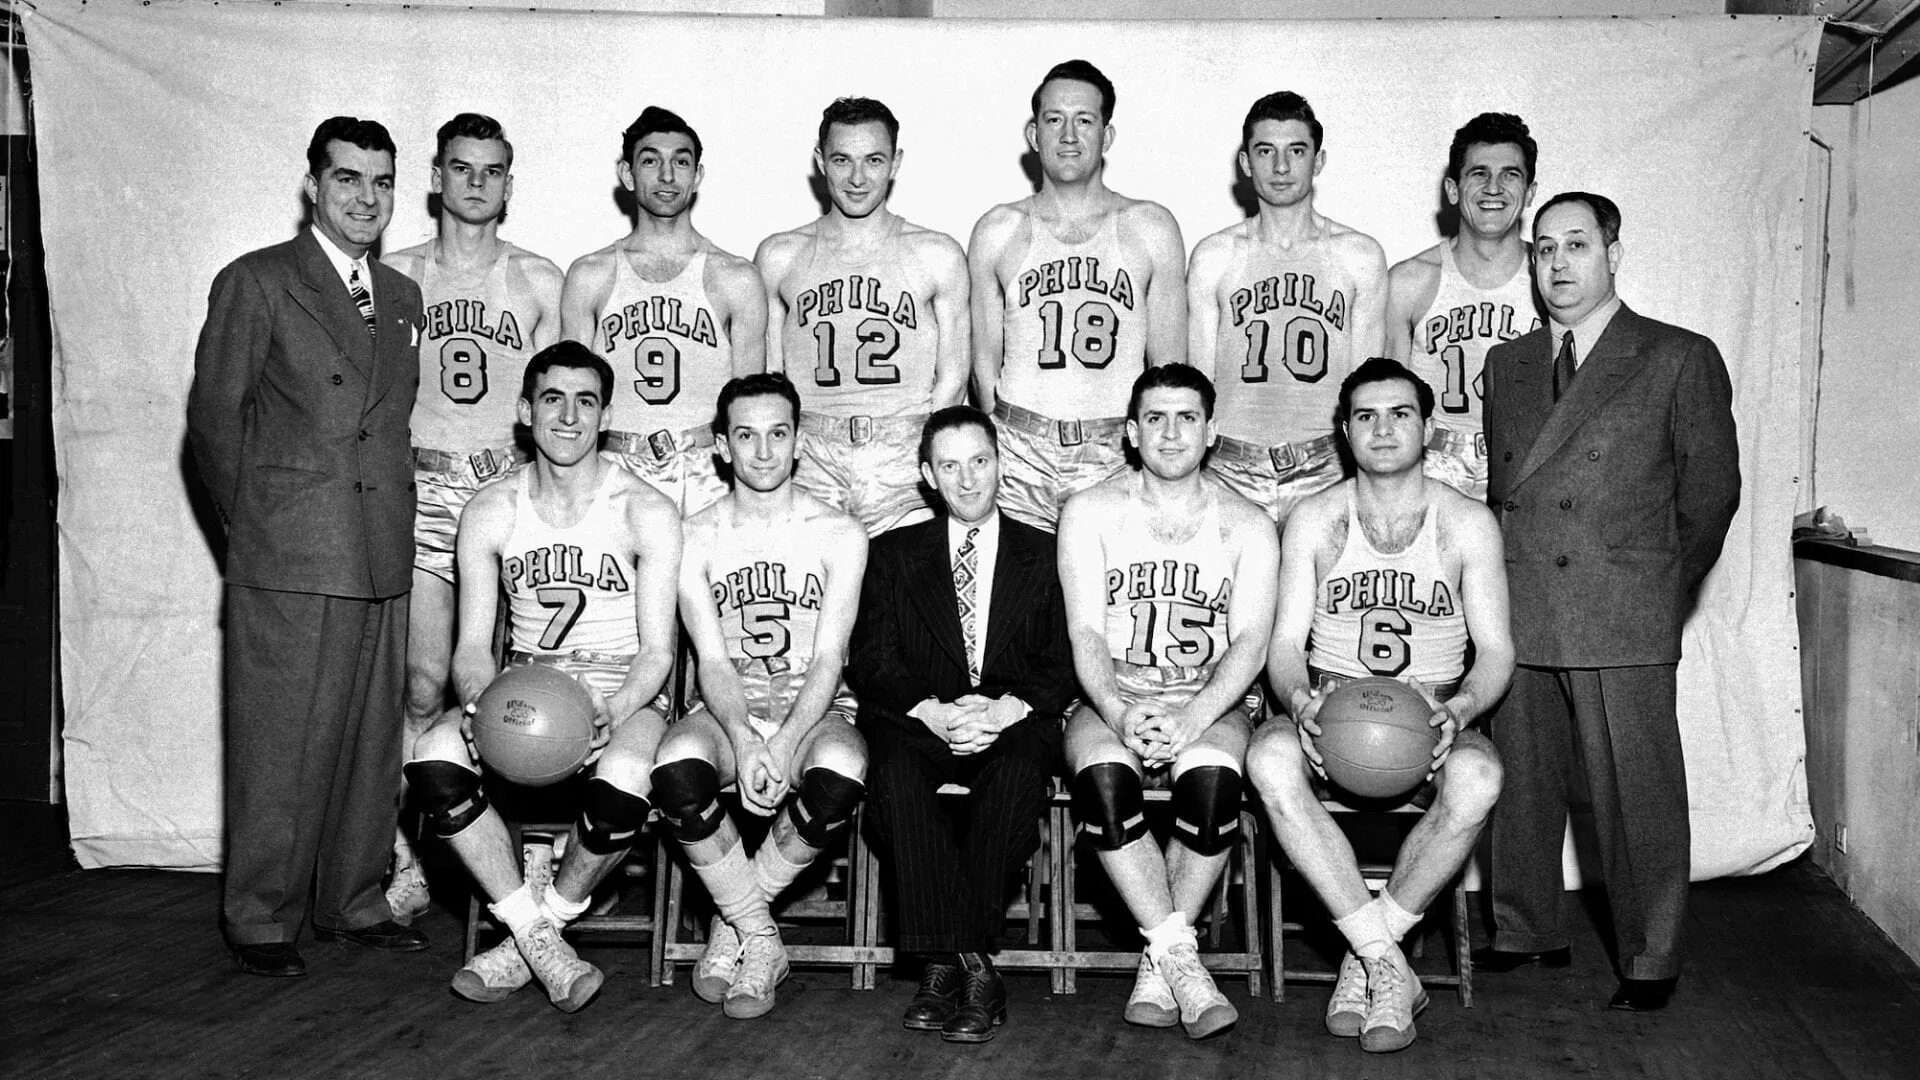 Первая баскетбольная команда. Баскетбольная Ассоциация Америки 1946. НБА баскетбол 1949. Первая Национальная баскетбольная лига 1898. Баскетбольная Ассоциация Америки Баа.